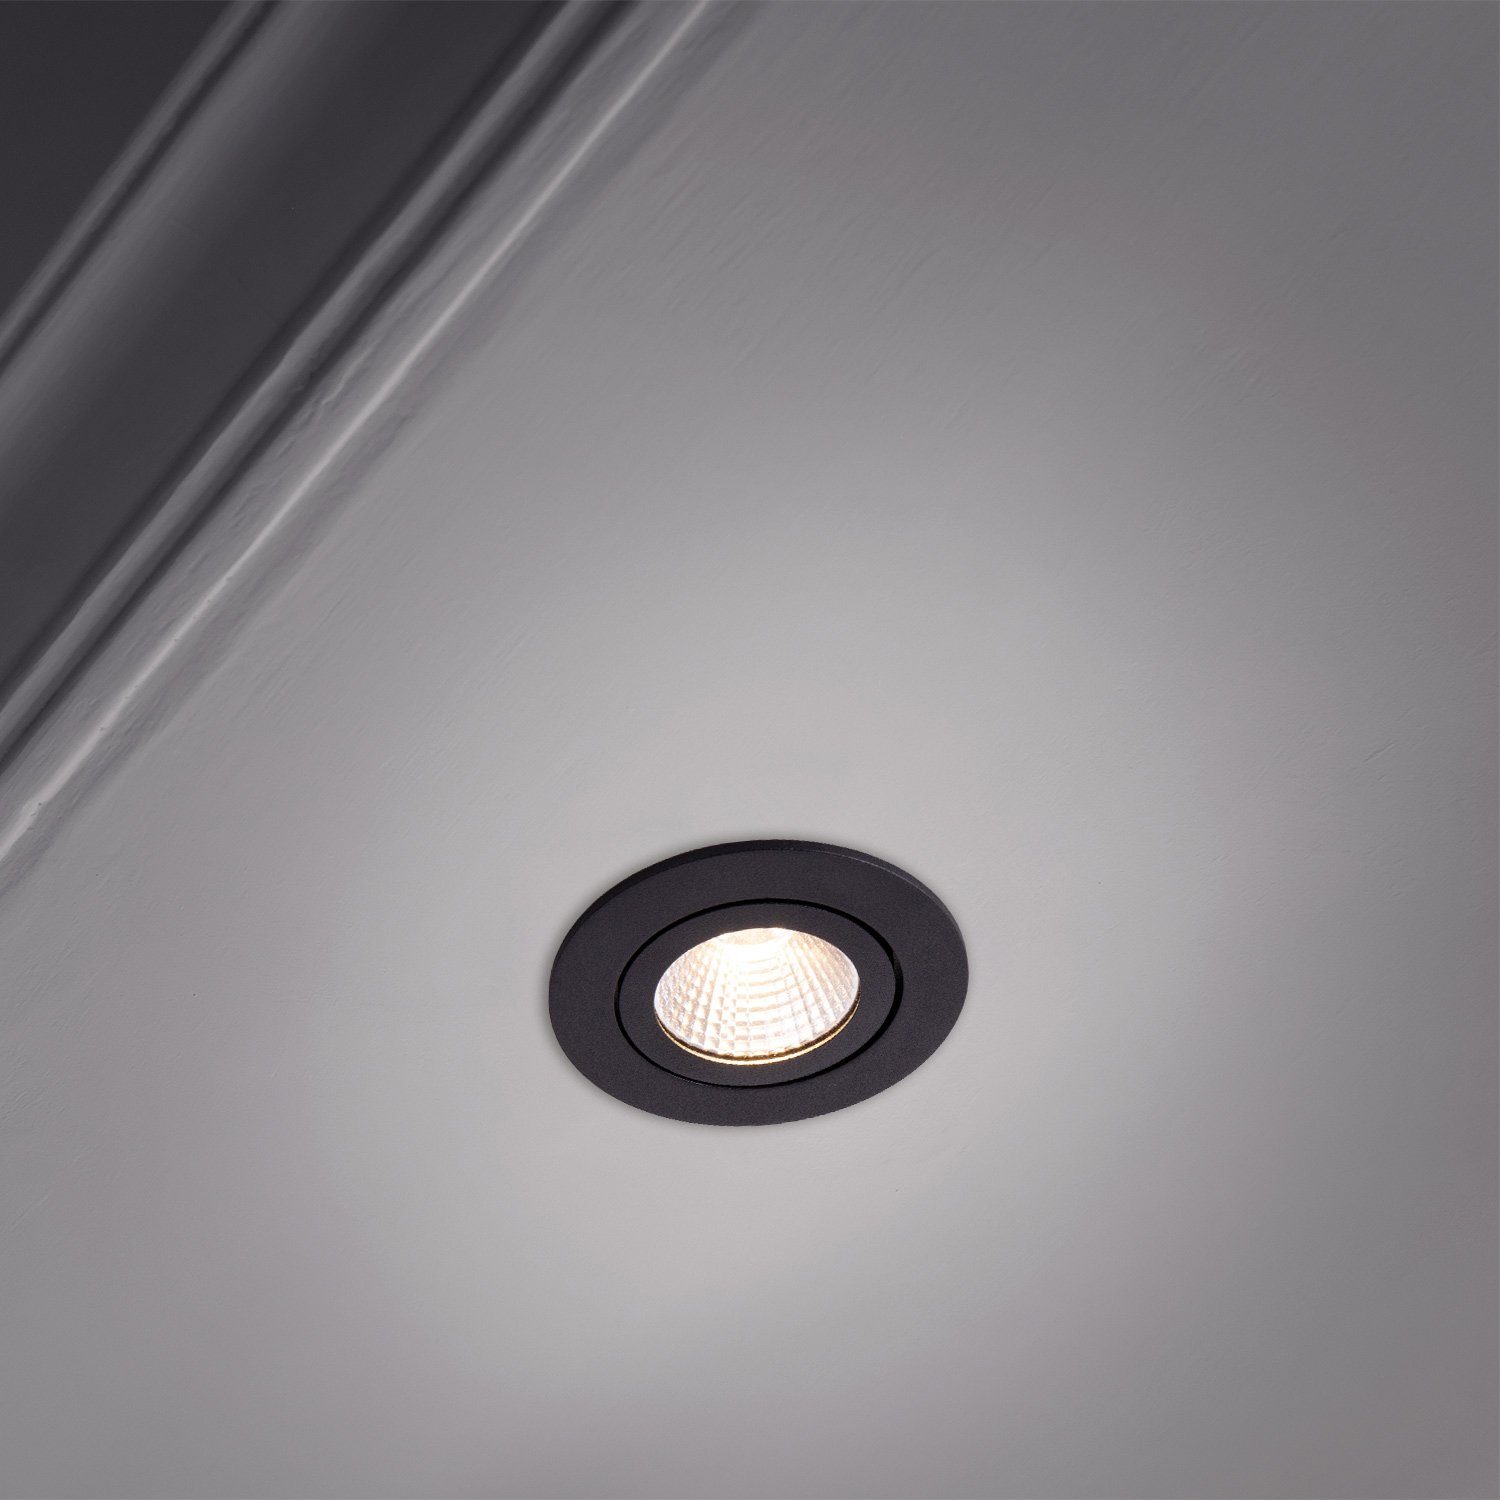 Paco Home Einbauleuchte Rita, Spotlight LED Strahler LED Warmweiß, LED wechselbar, Schwenkbar Einbaustrahler Flach dimmbar